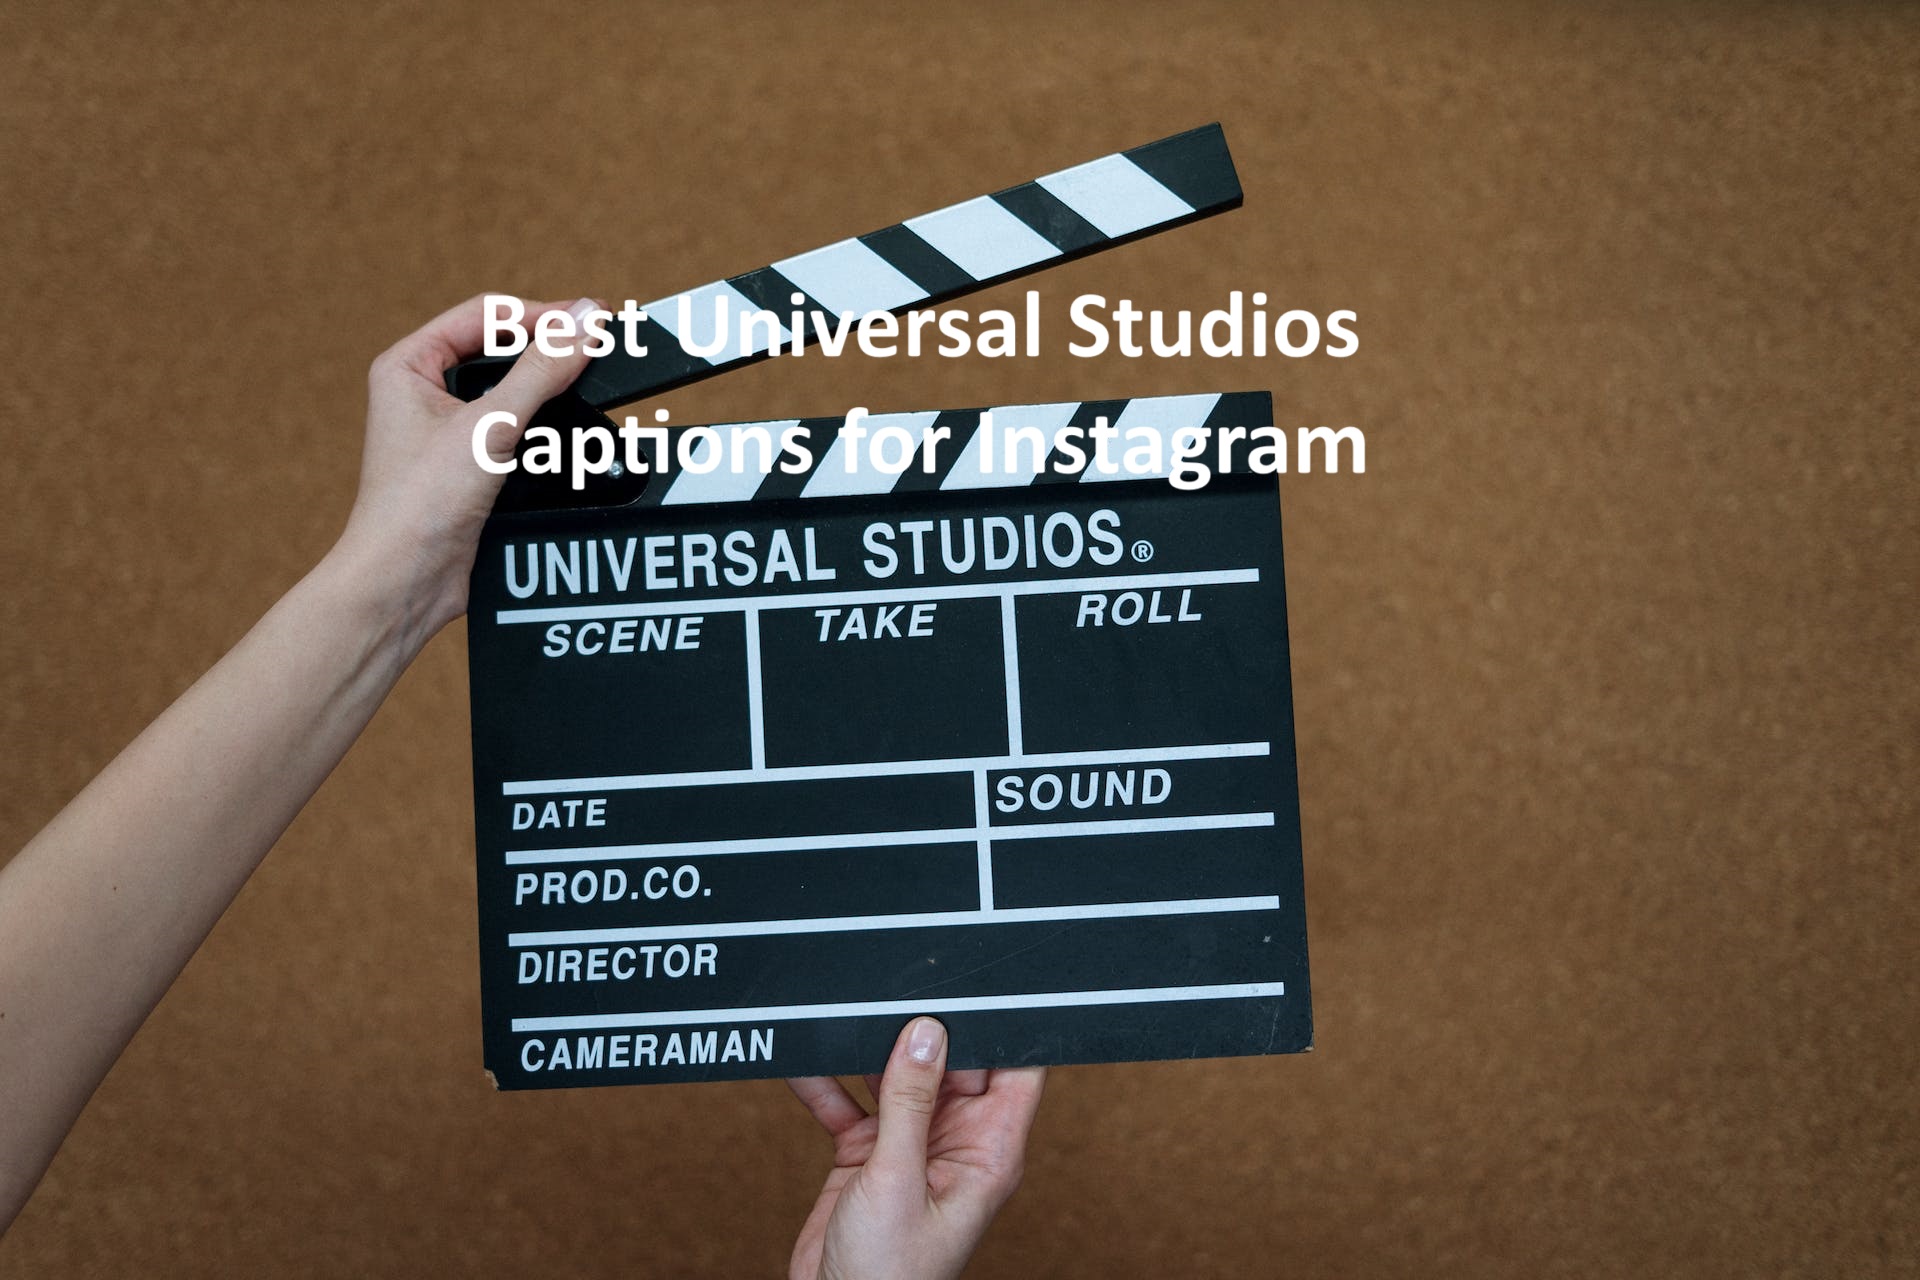 Universal Studios Captions for Instagram